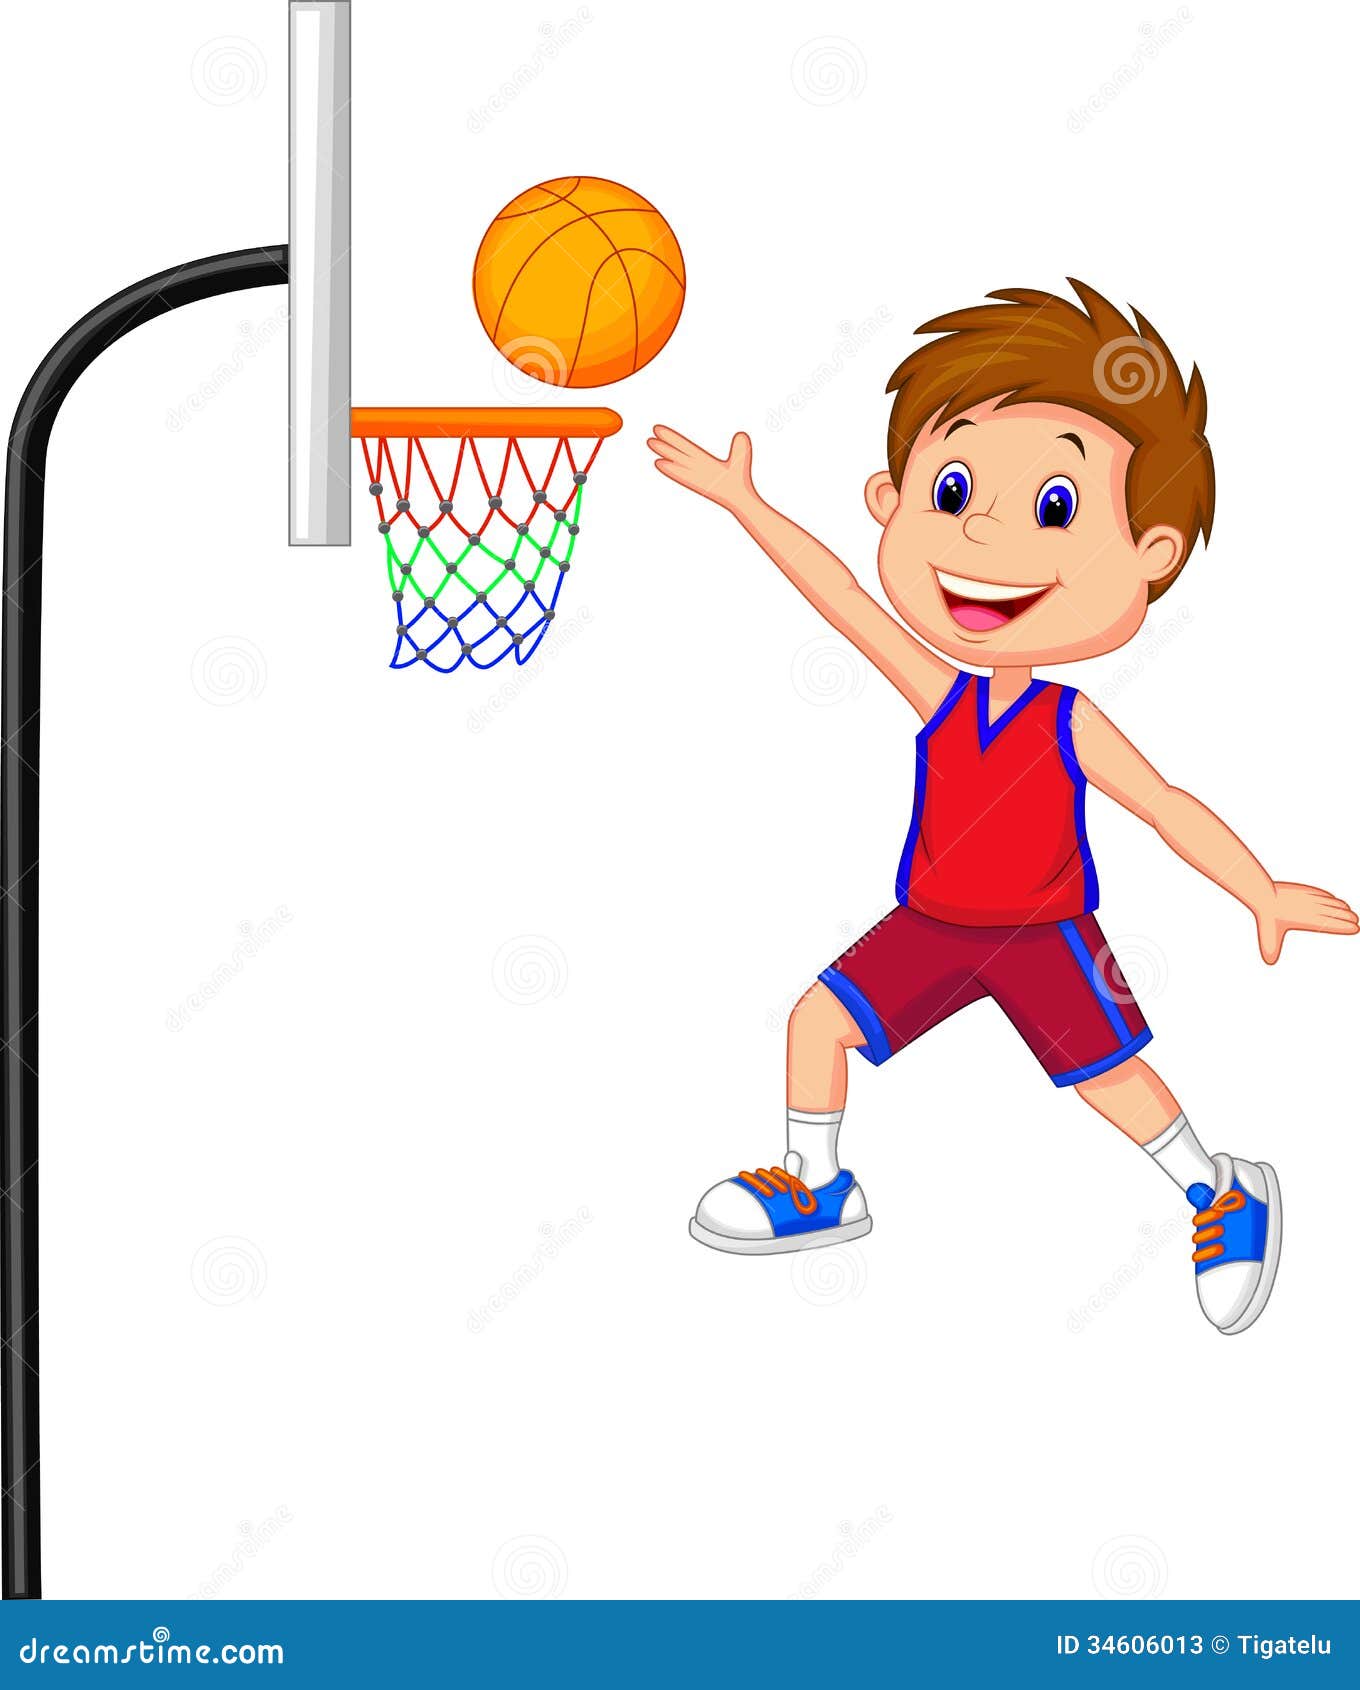 Cartoon Boy Playing Basket Ball Stock Vector - Illustration of